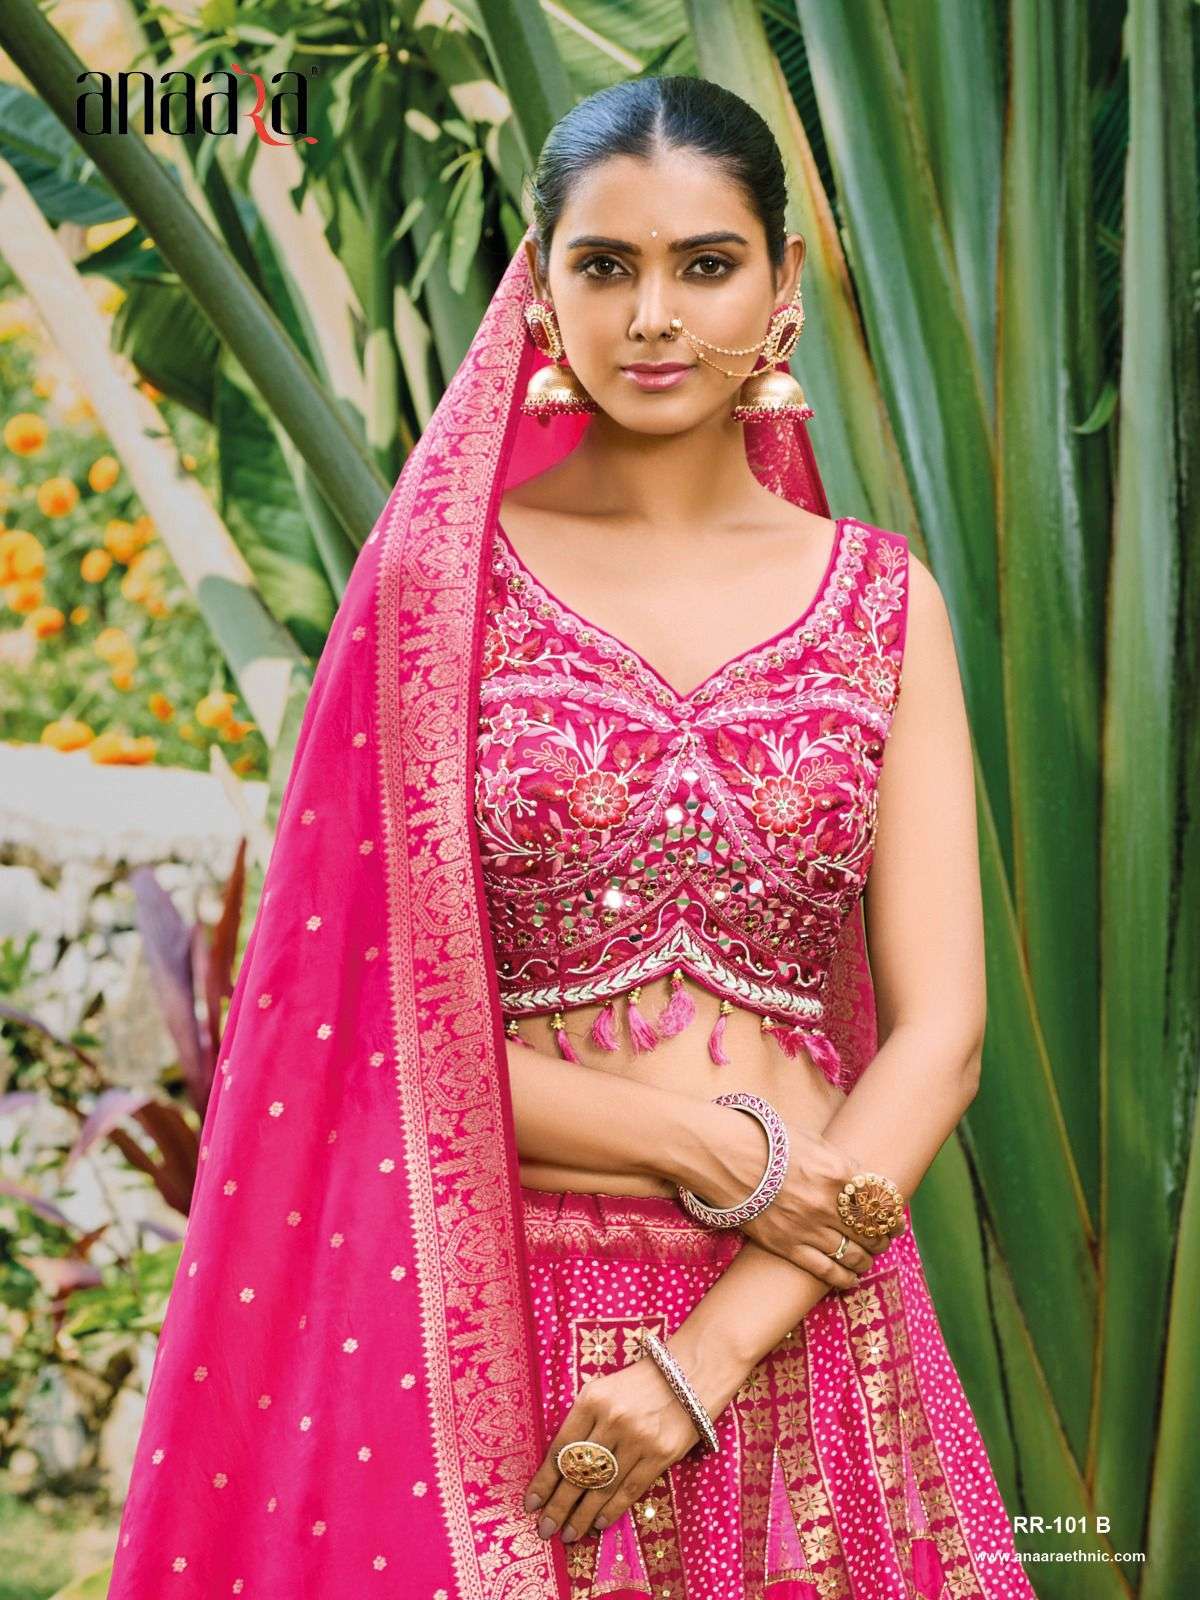 Net Wedding NEW HEAVY DESIGNER LEHENGA CHOLI at Rs 13000 in Surat